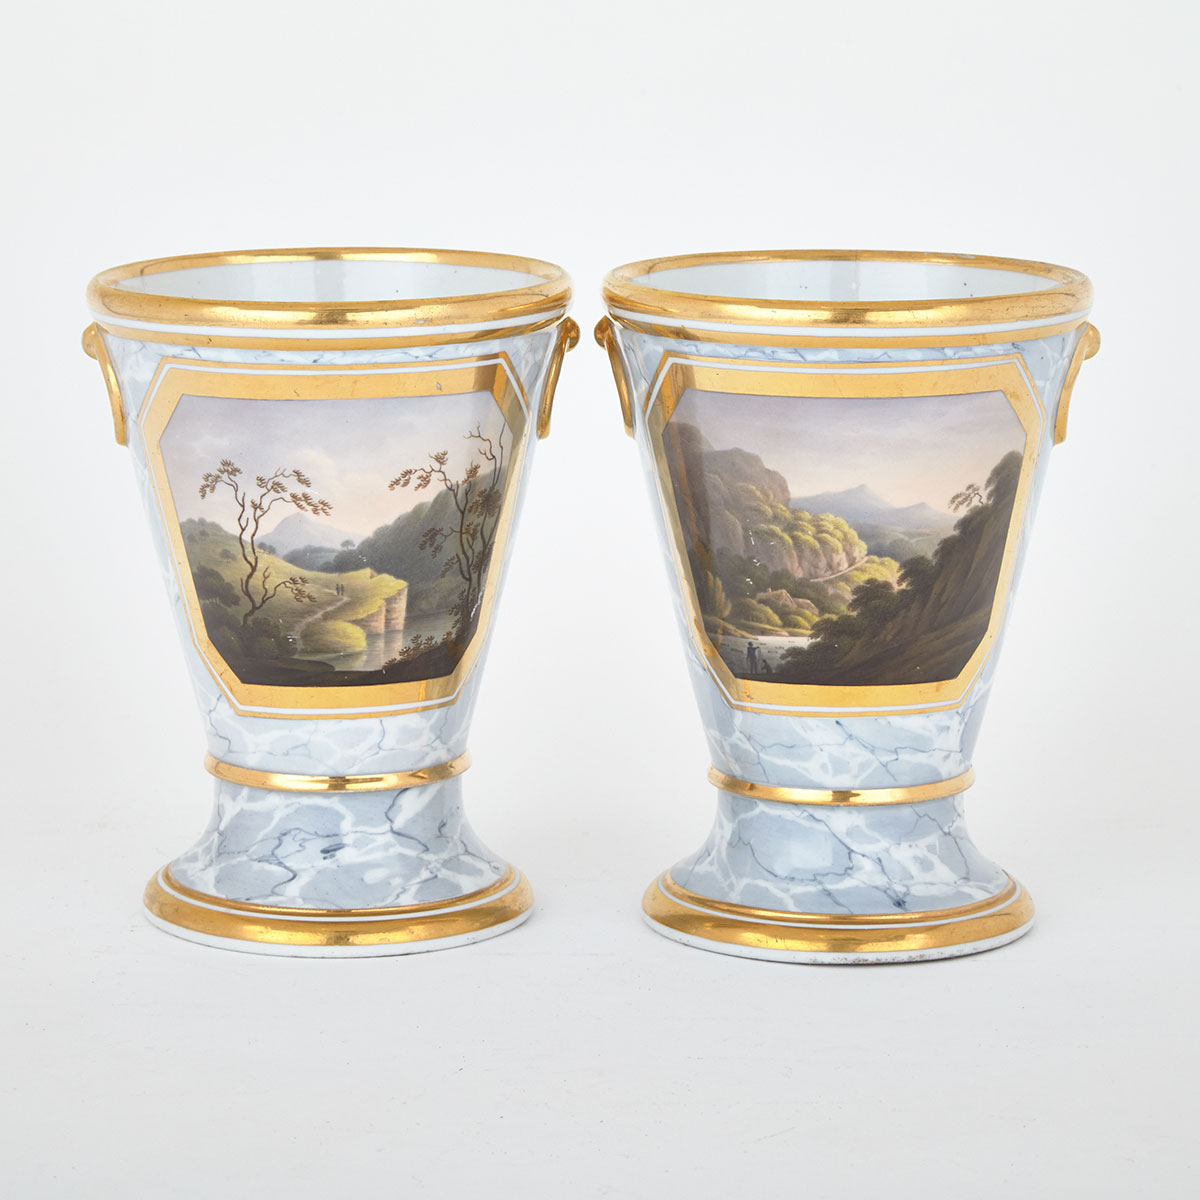 Pair of Barr, Flight & Barr Worcester Grey Marbled Ground Vases, c.1804-13